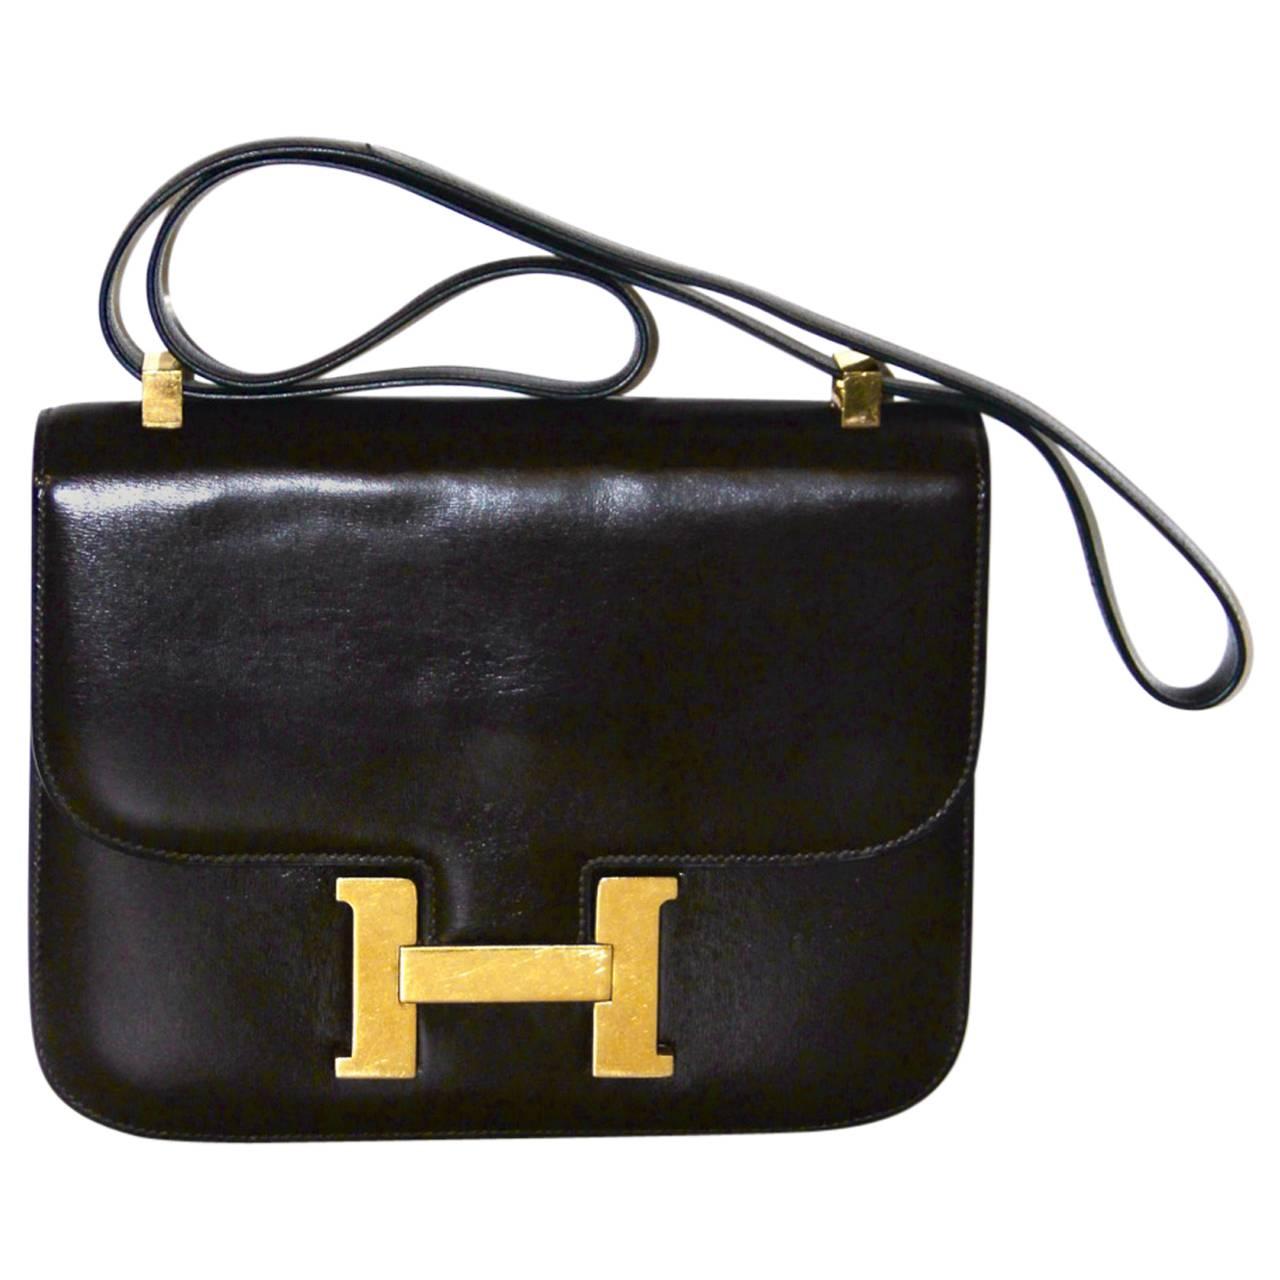 Hermes Constance Bag - Dark Brown Box Leather - Vintage - Excellent Condition